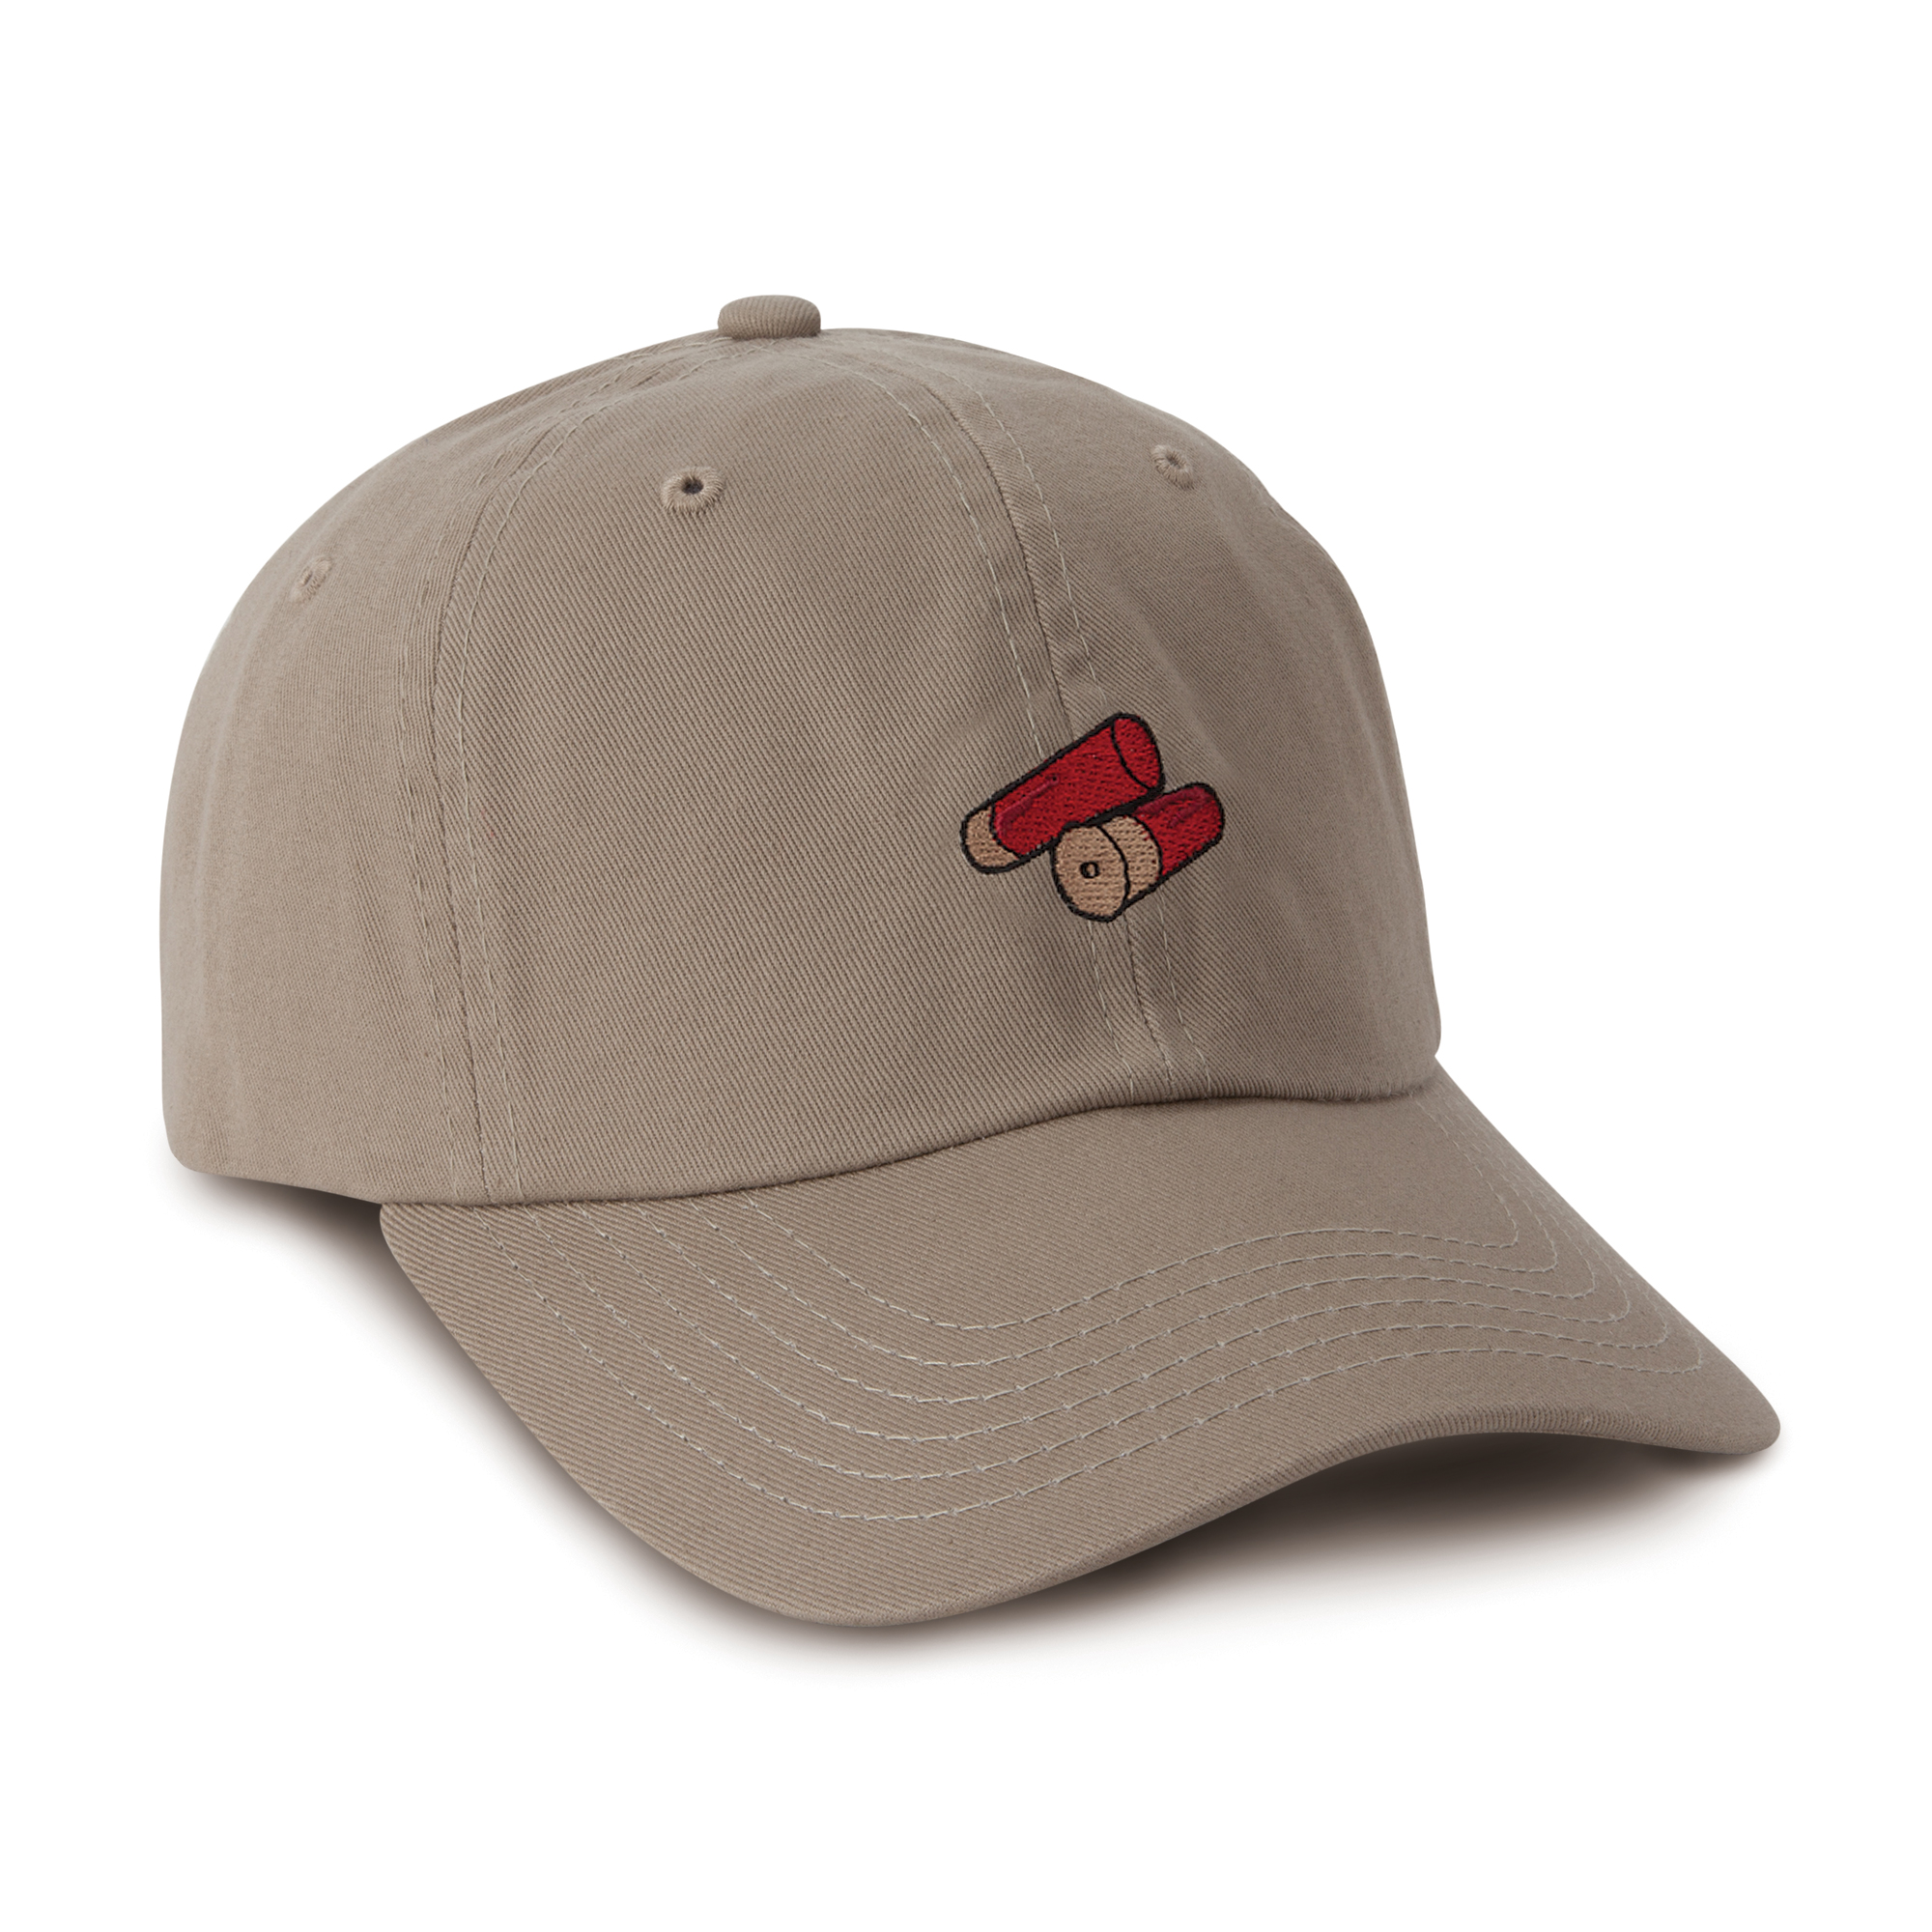 Golf Hat, Shotgun Shell Hat | Imperial Headwear